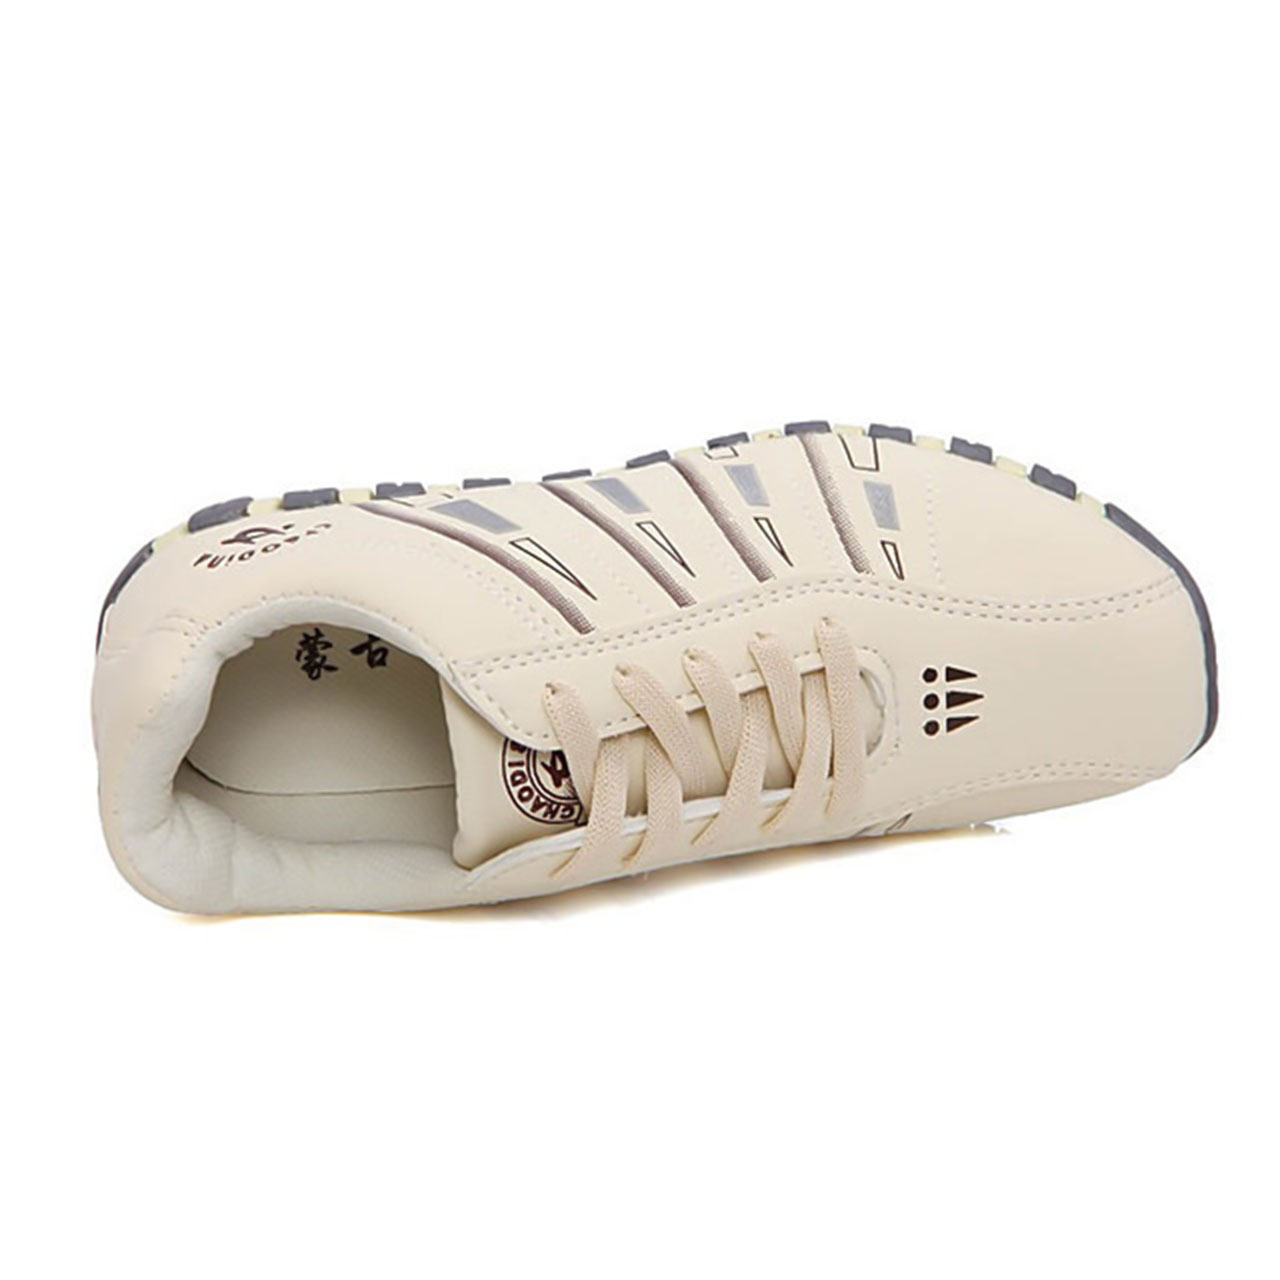 Women's Sneakers Flat Heel Lace-up PU Comfort Walking Shoes Beige